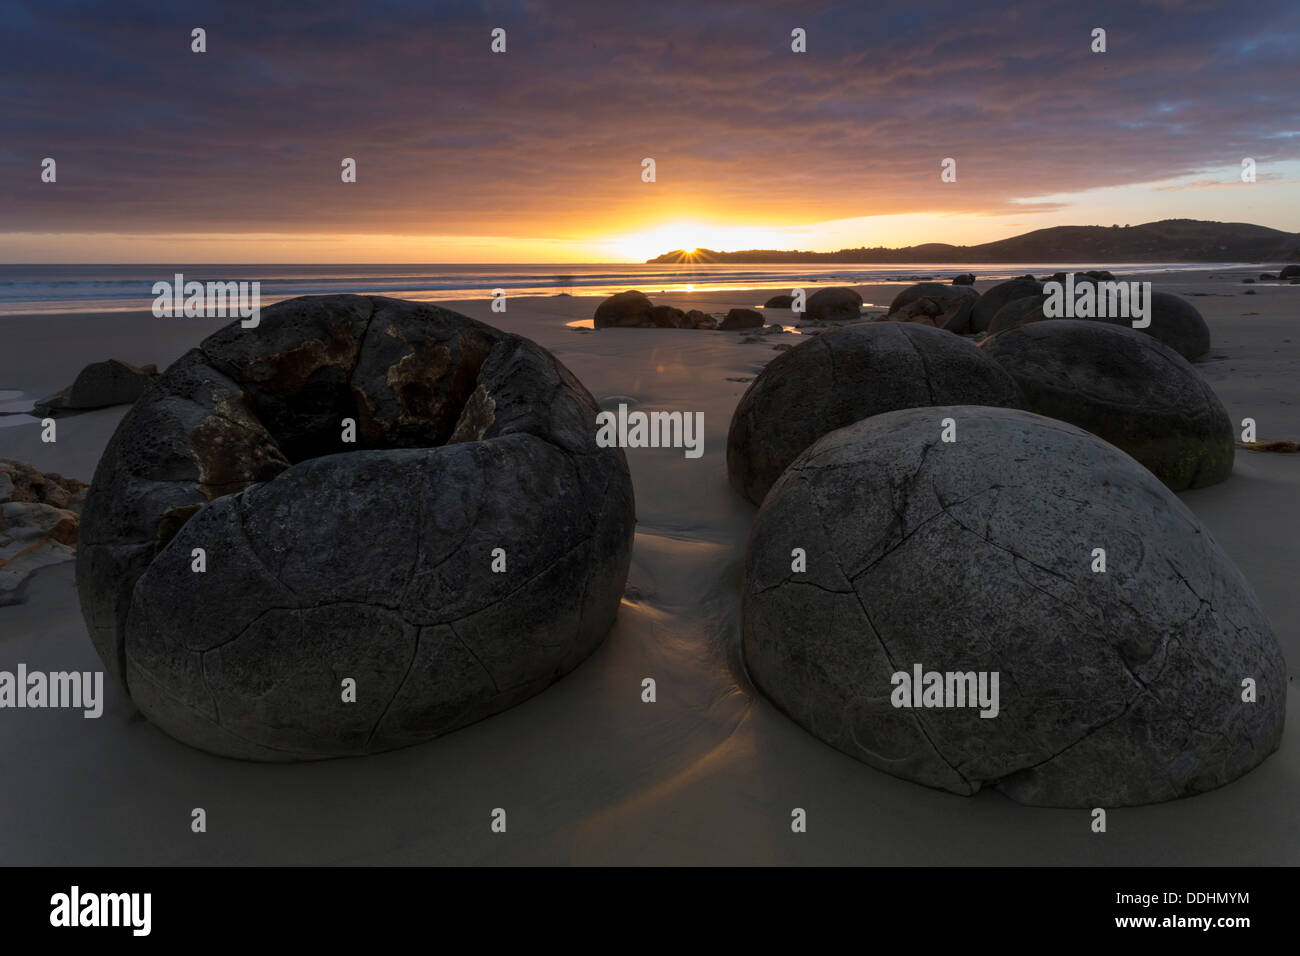 Moeraki Boulders on the beach at sunrise Stock Photo